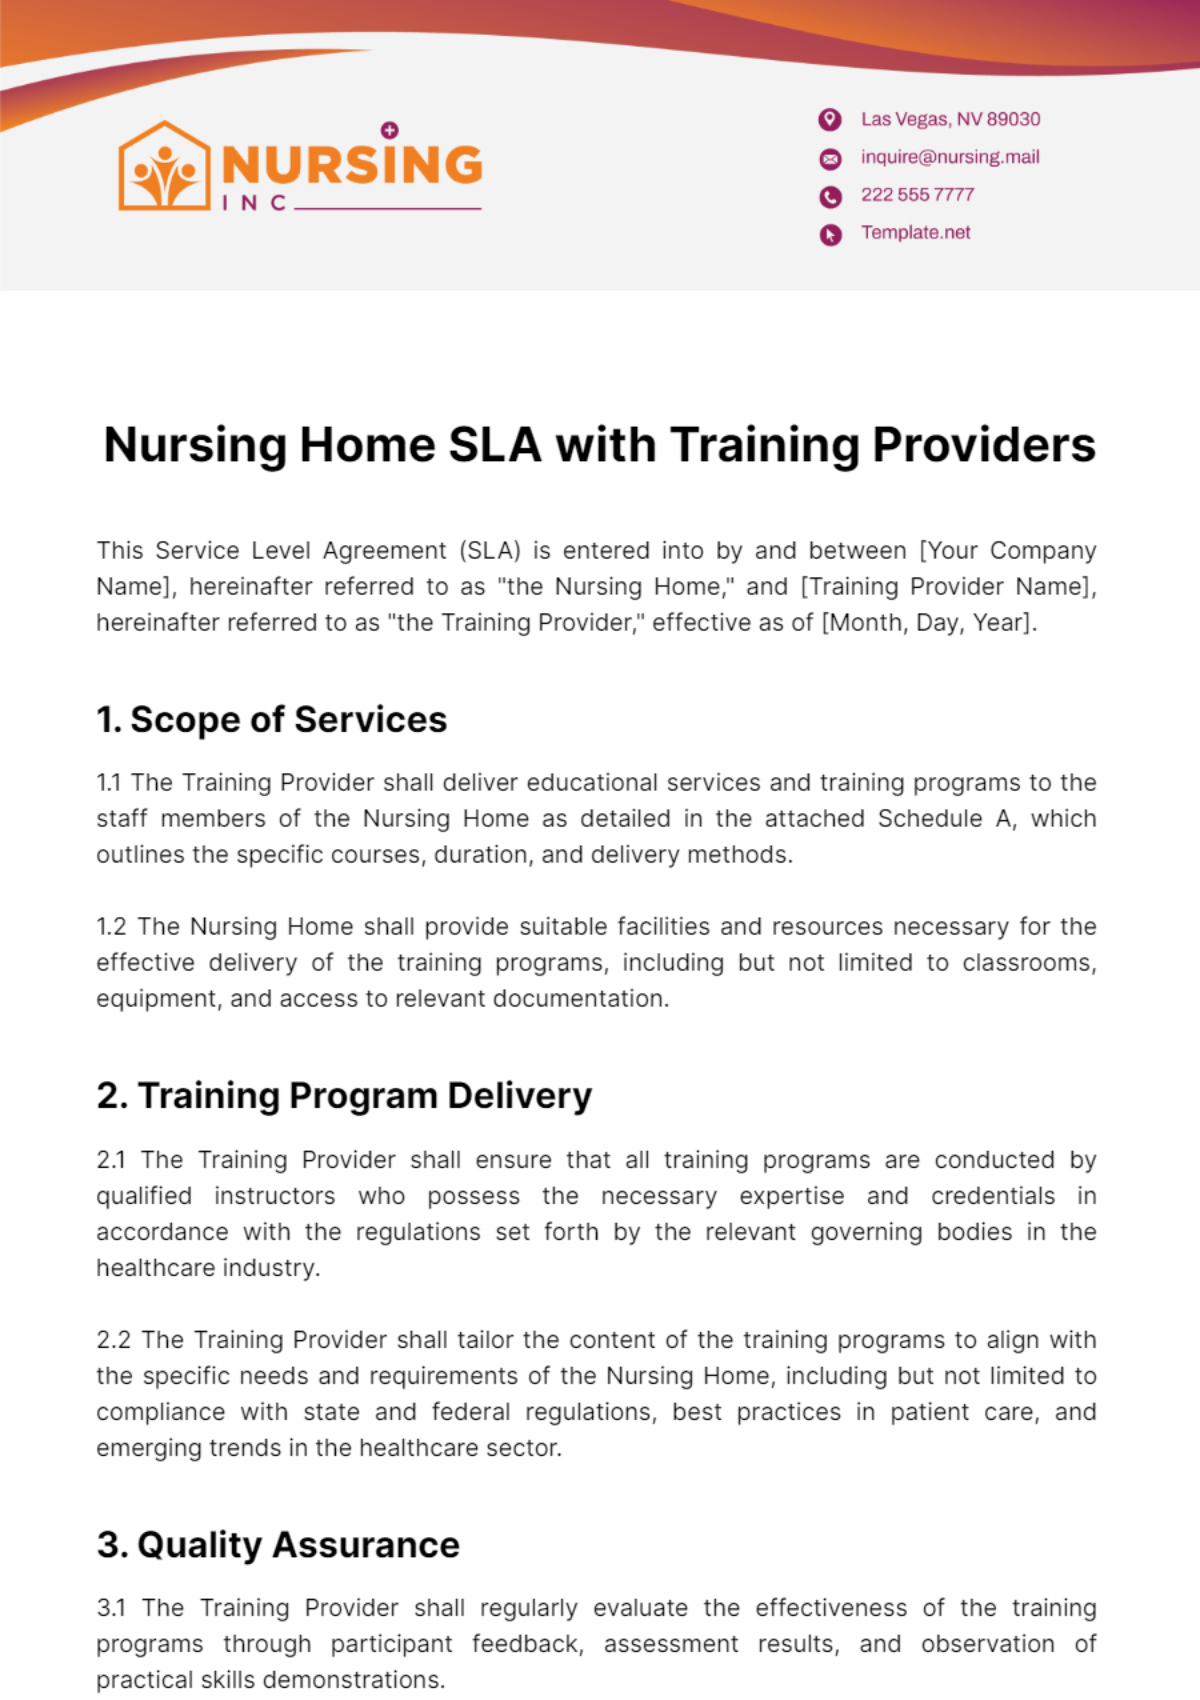 Nursing Home SLA with Training Providers Template